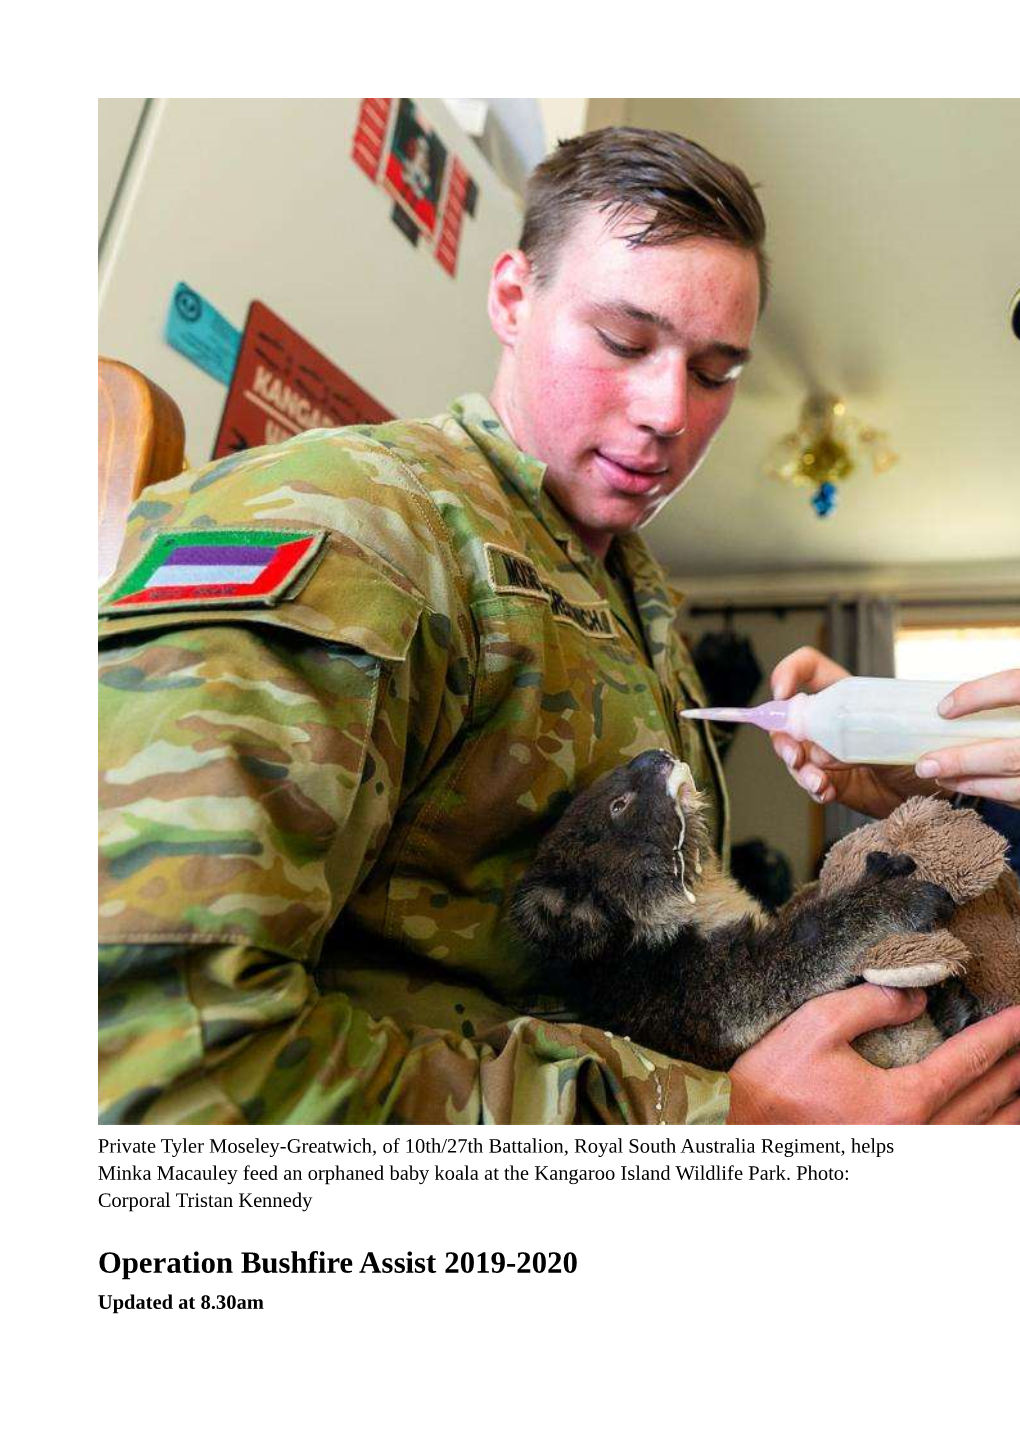 10Th/27Th Battalion, Royal South Australia Regiment, Helps Minka Macauley Feed an Orphaned Baby Koala at the Kangaroo Island Wildlife Park